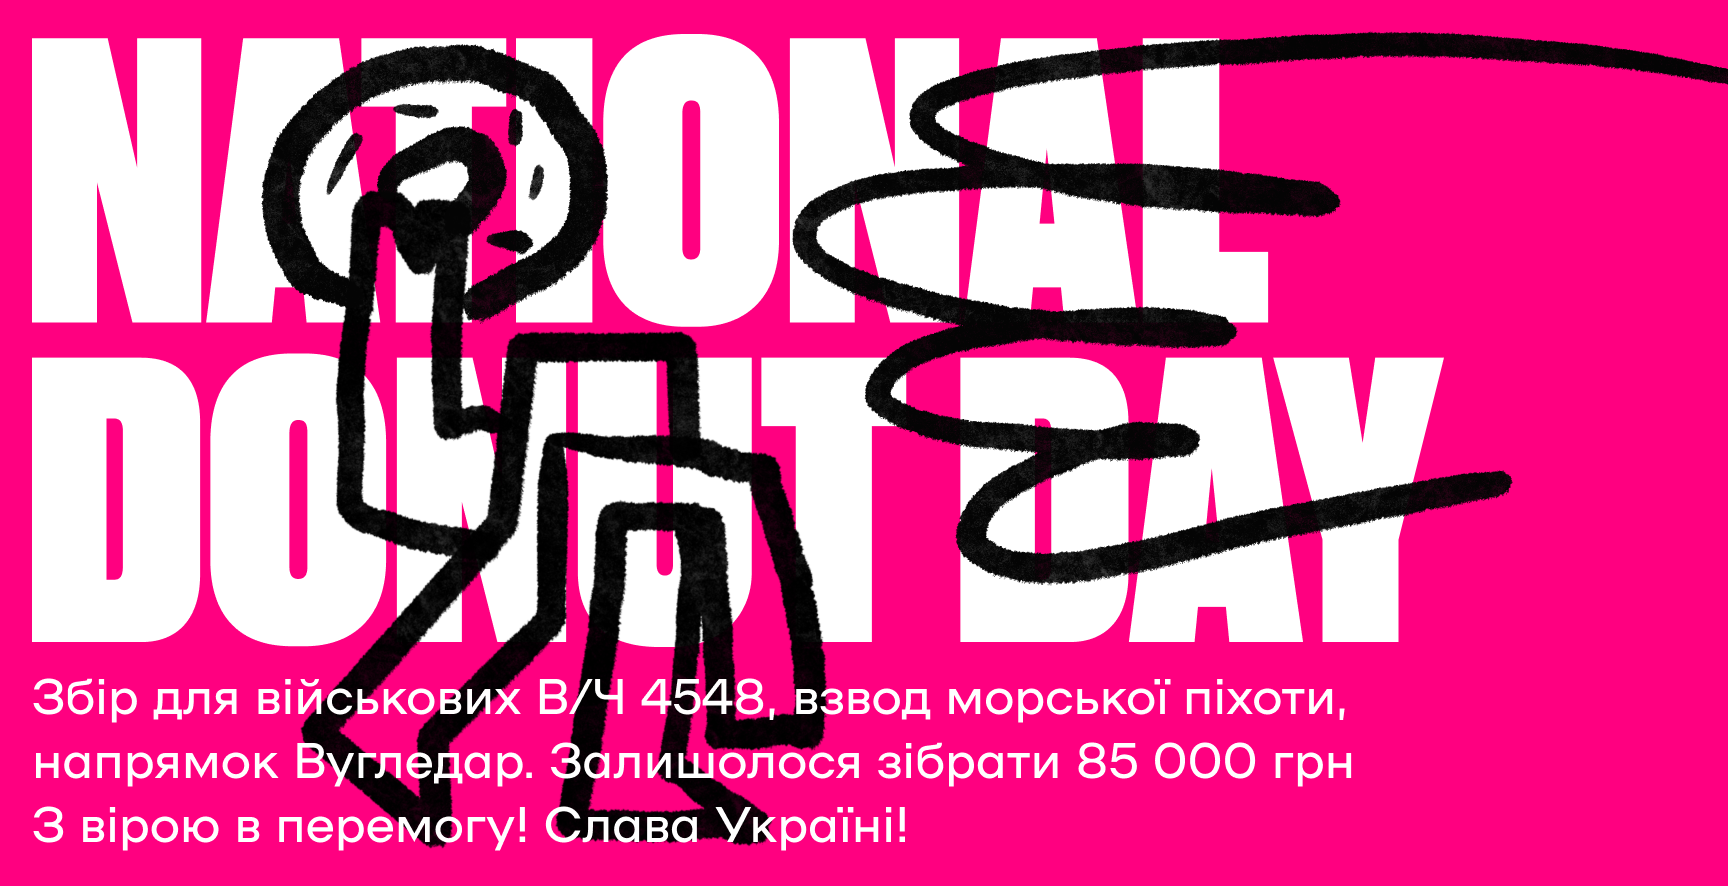 Donut Weekend у Києві, 2-4 червня